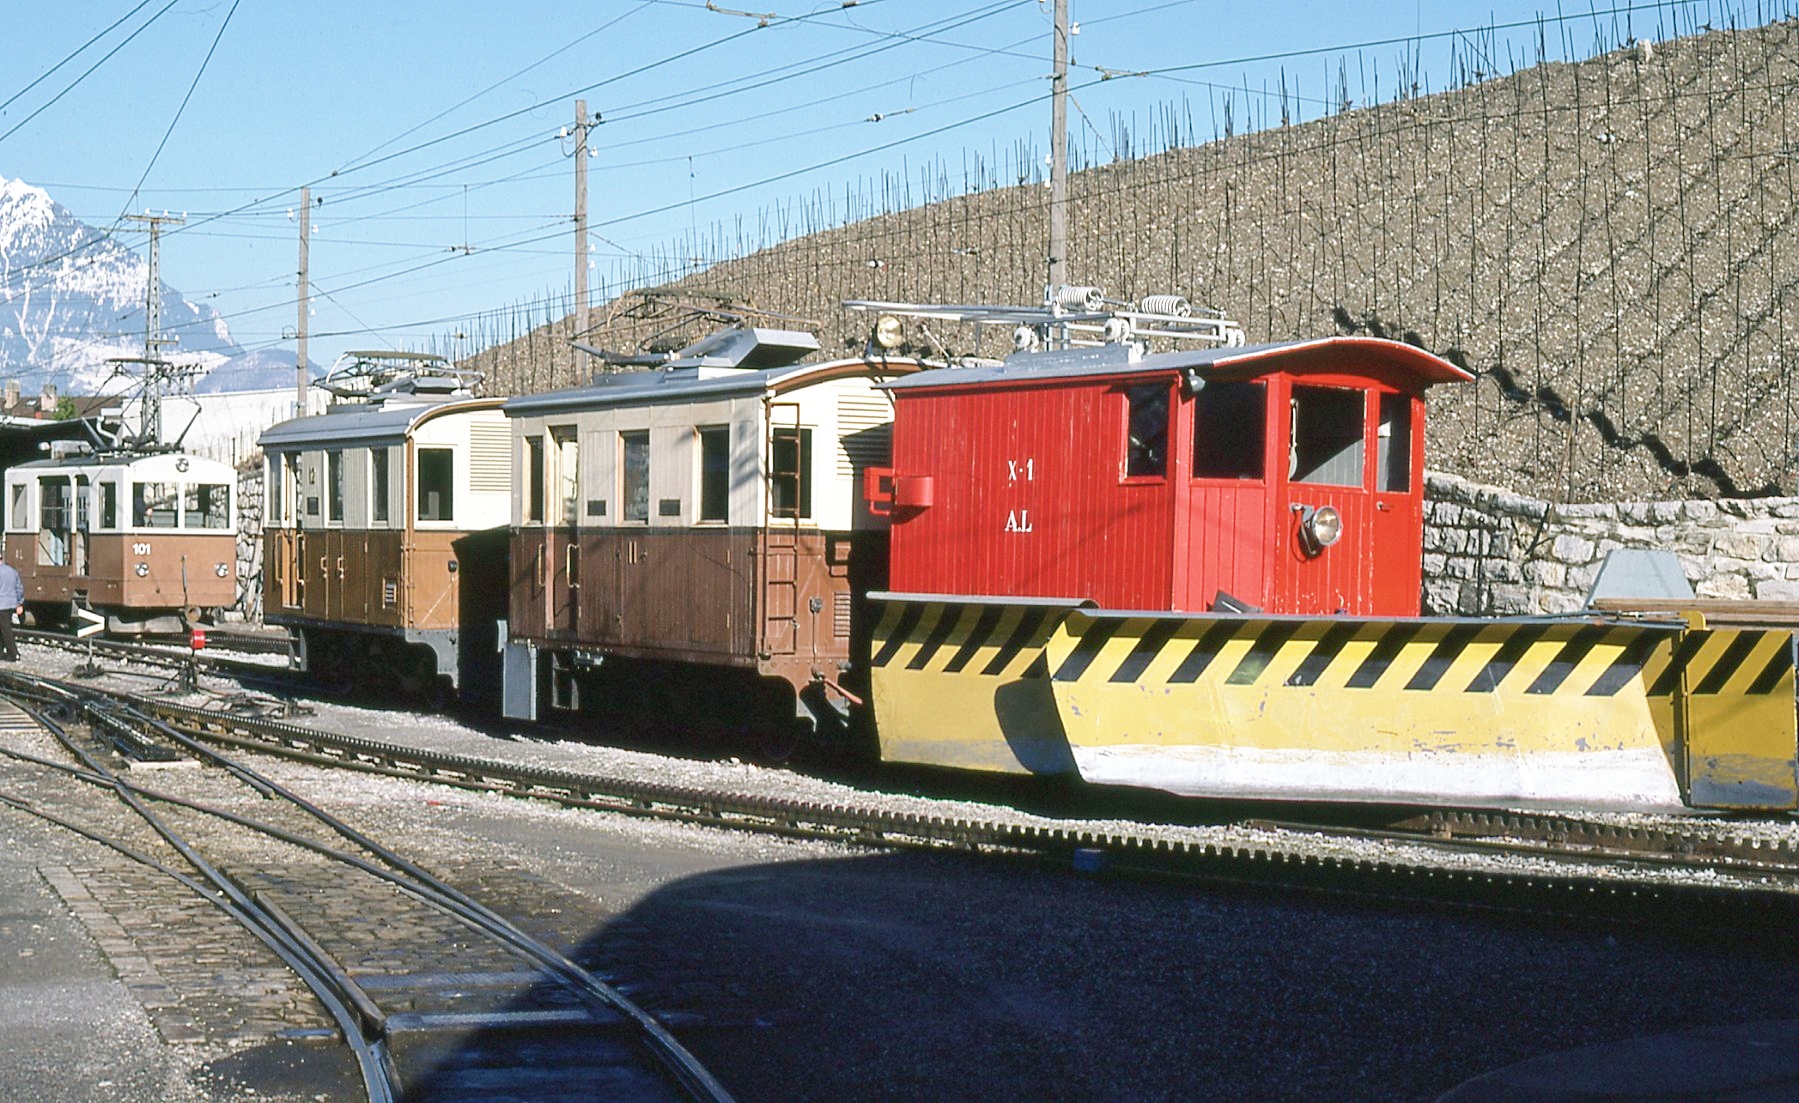 fællesskab ejer essens File:Trains de lAigle-Leysin (Suisse) (6435173389).jpg - Wikimedia Commons